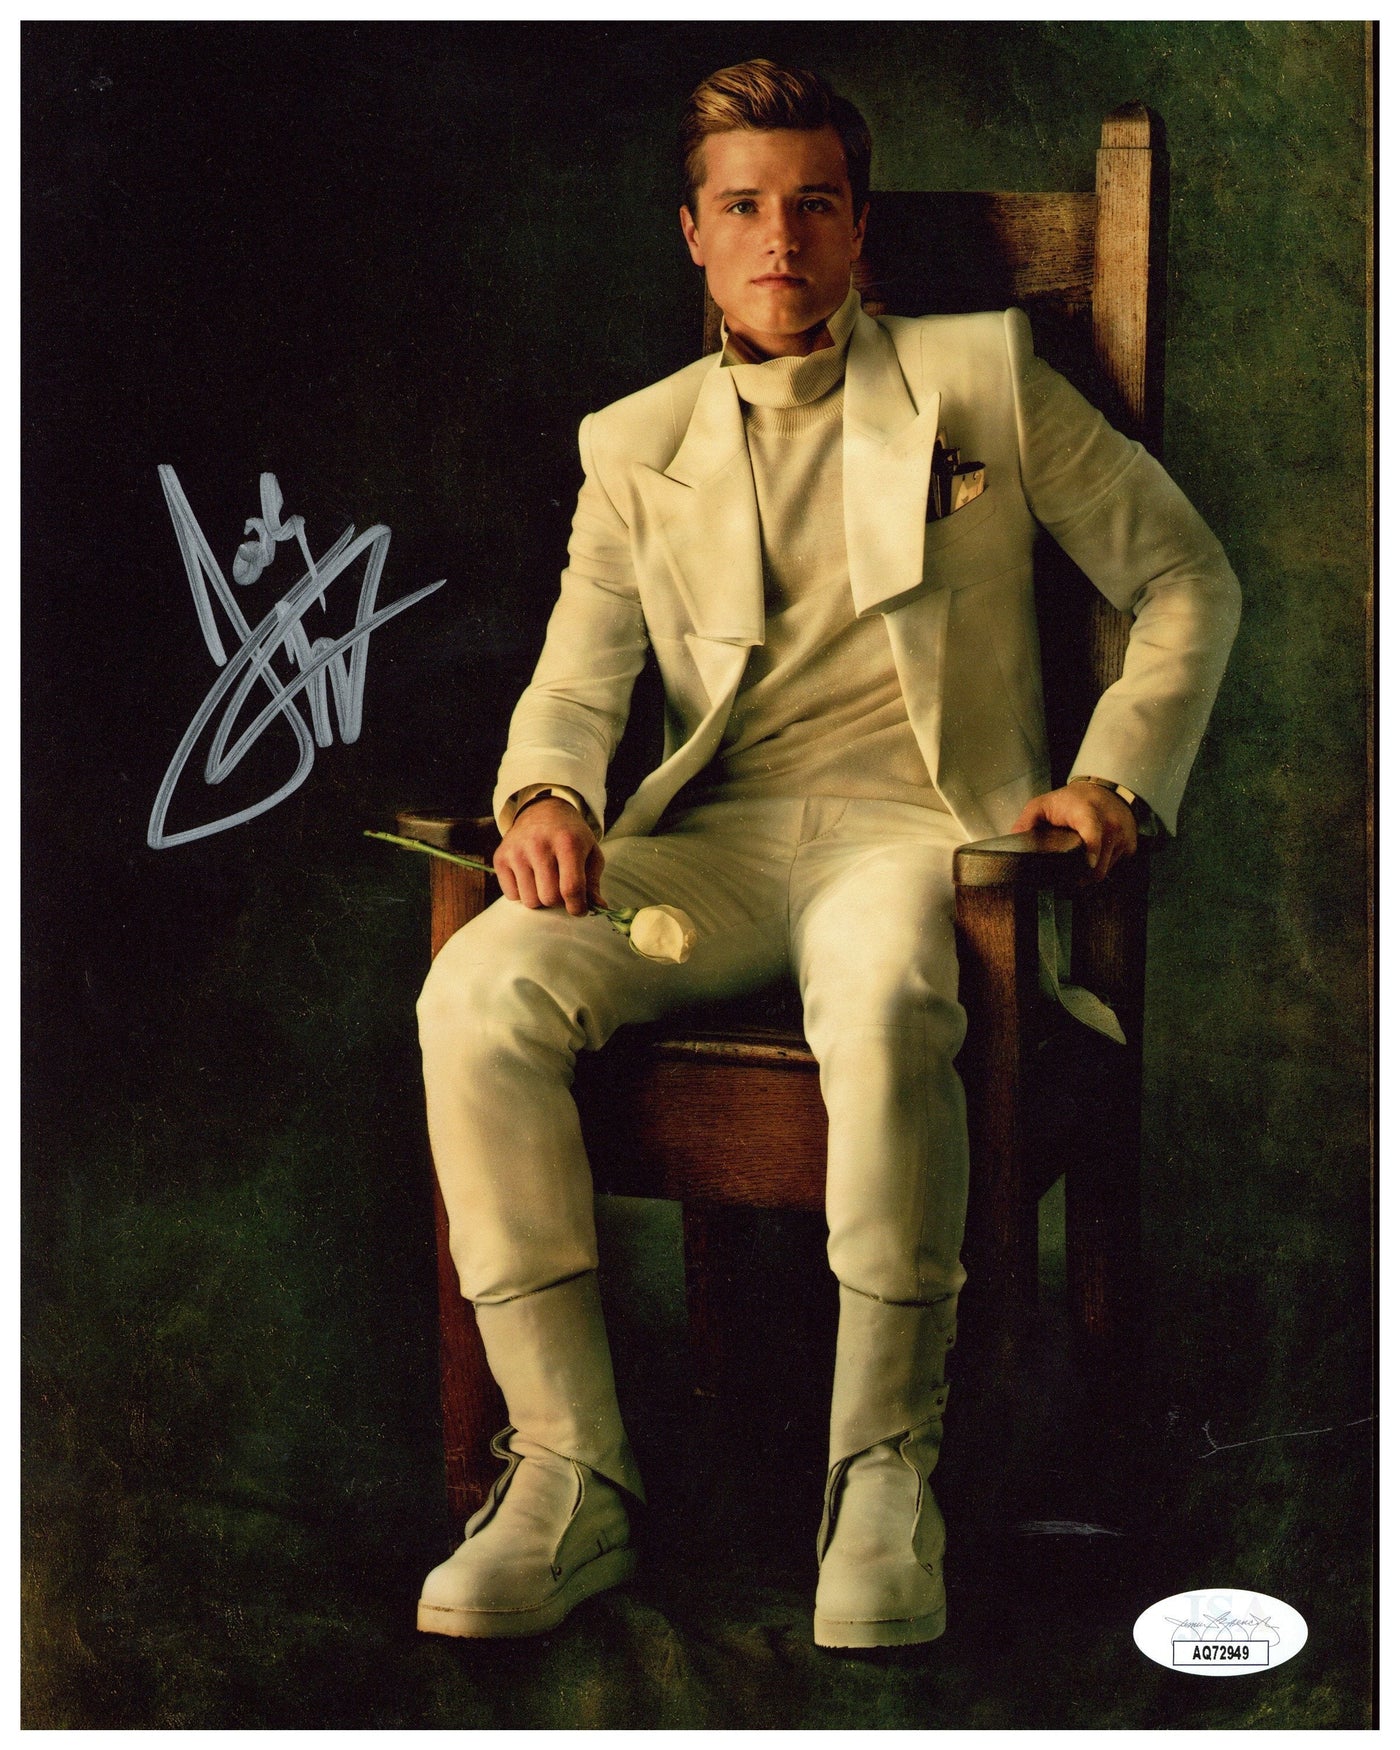 Josh Hutcherson Signed 8x10 Photo The Hunger Games Peeta Mellark Autographed JSA 4